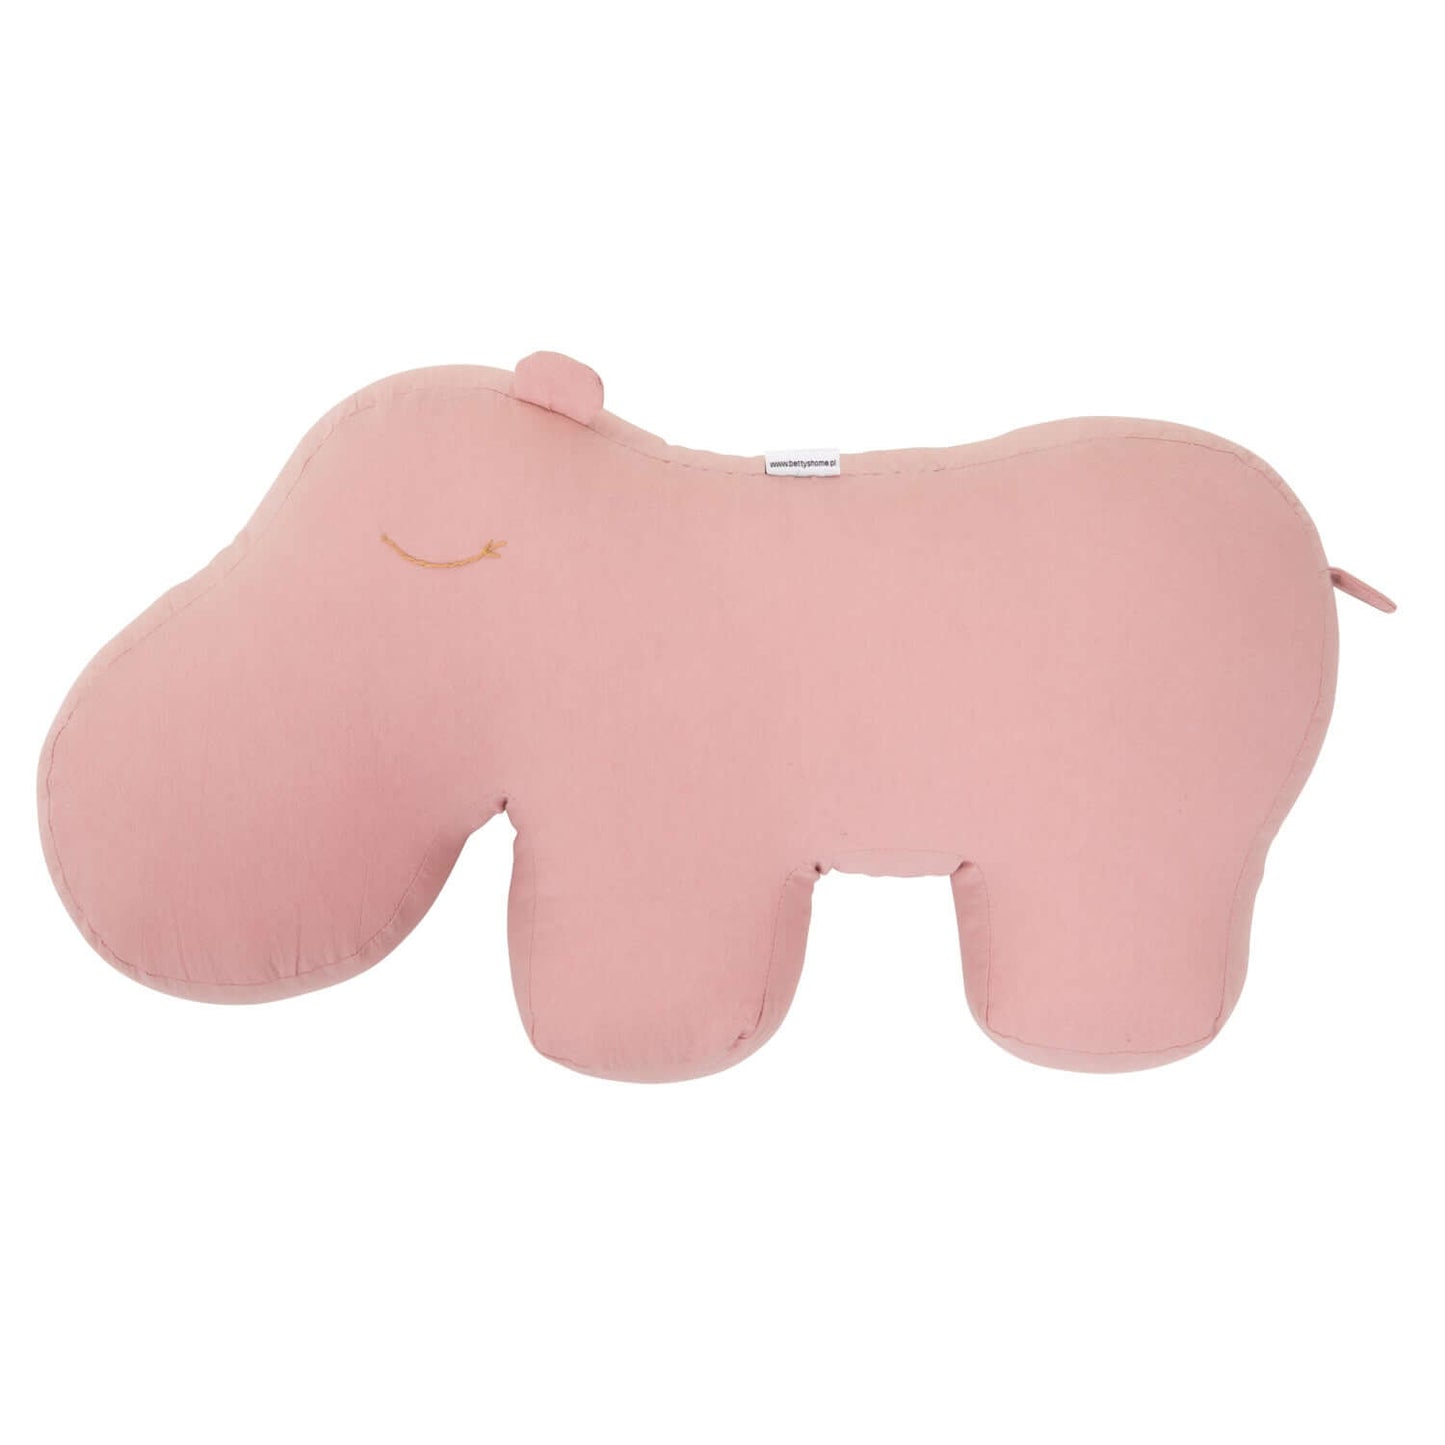 Cushion Hippo pink